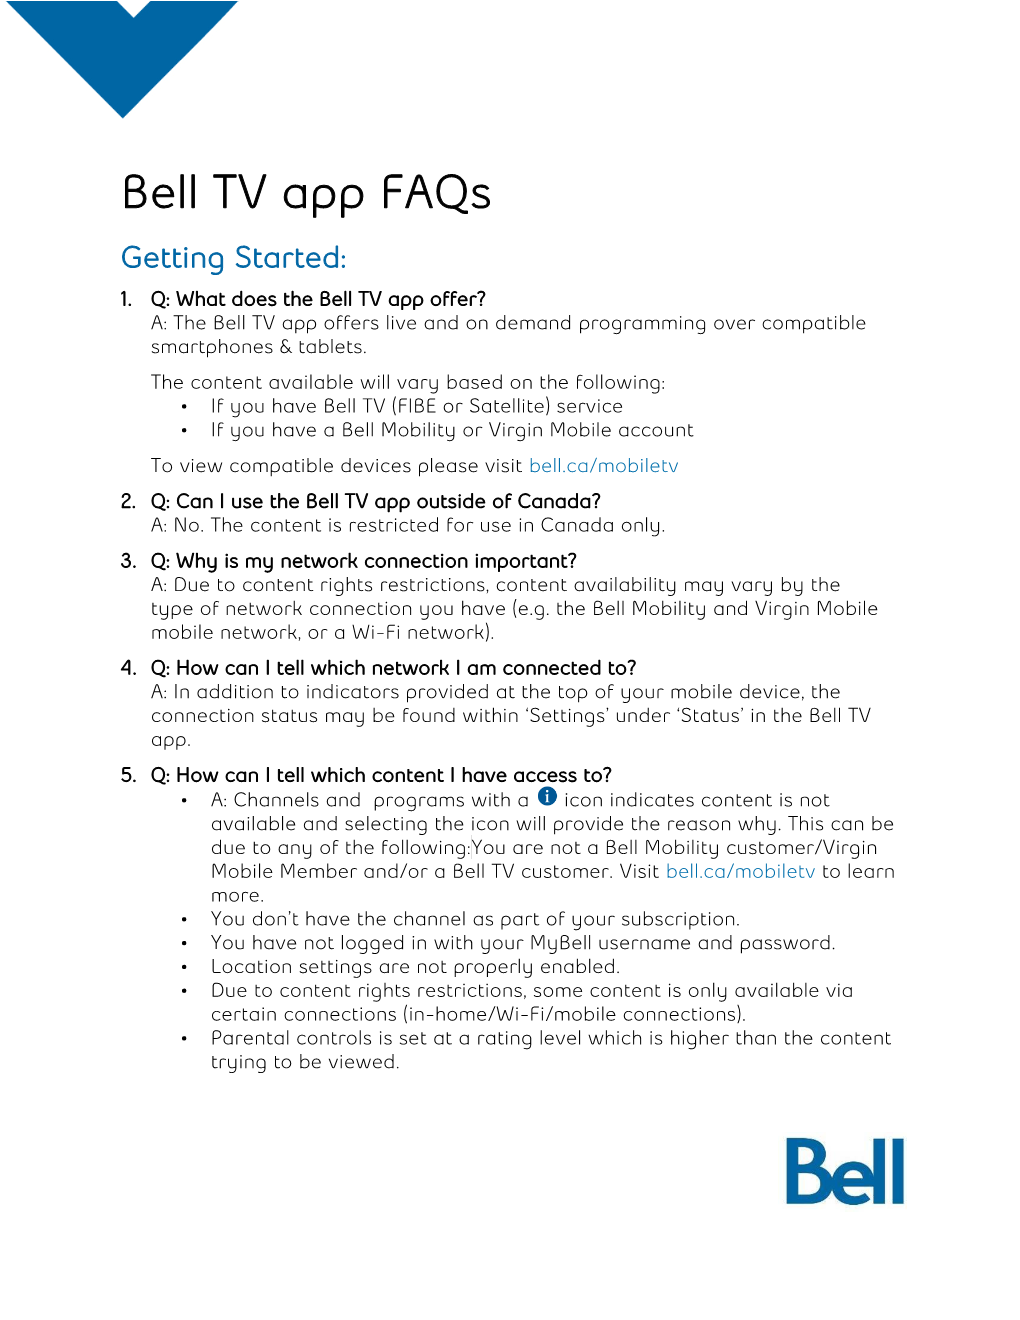 Bell TV App Faqs